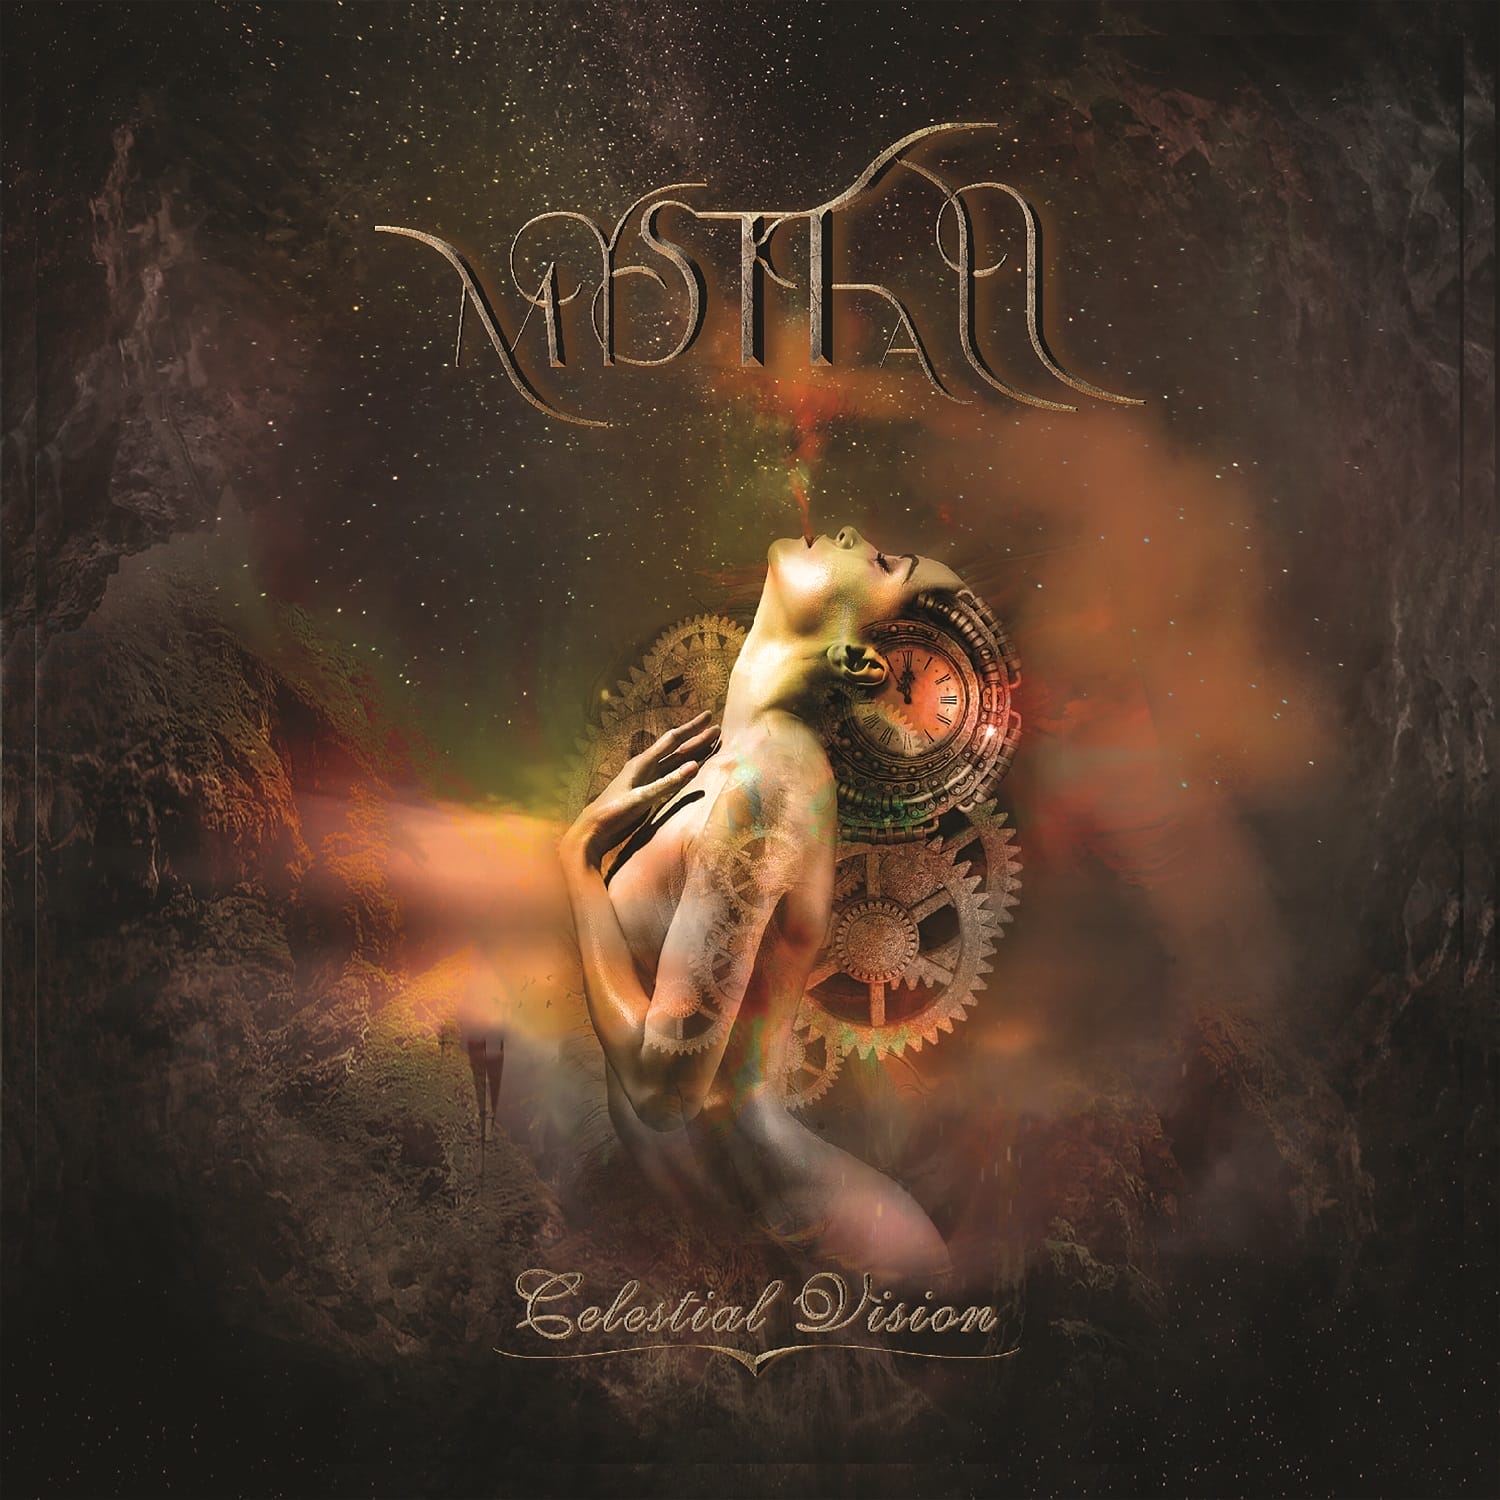 Cover des Albums "Celestial Vision" von der Band "Mystfall"